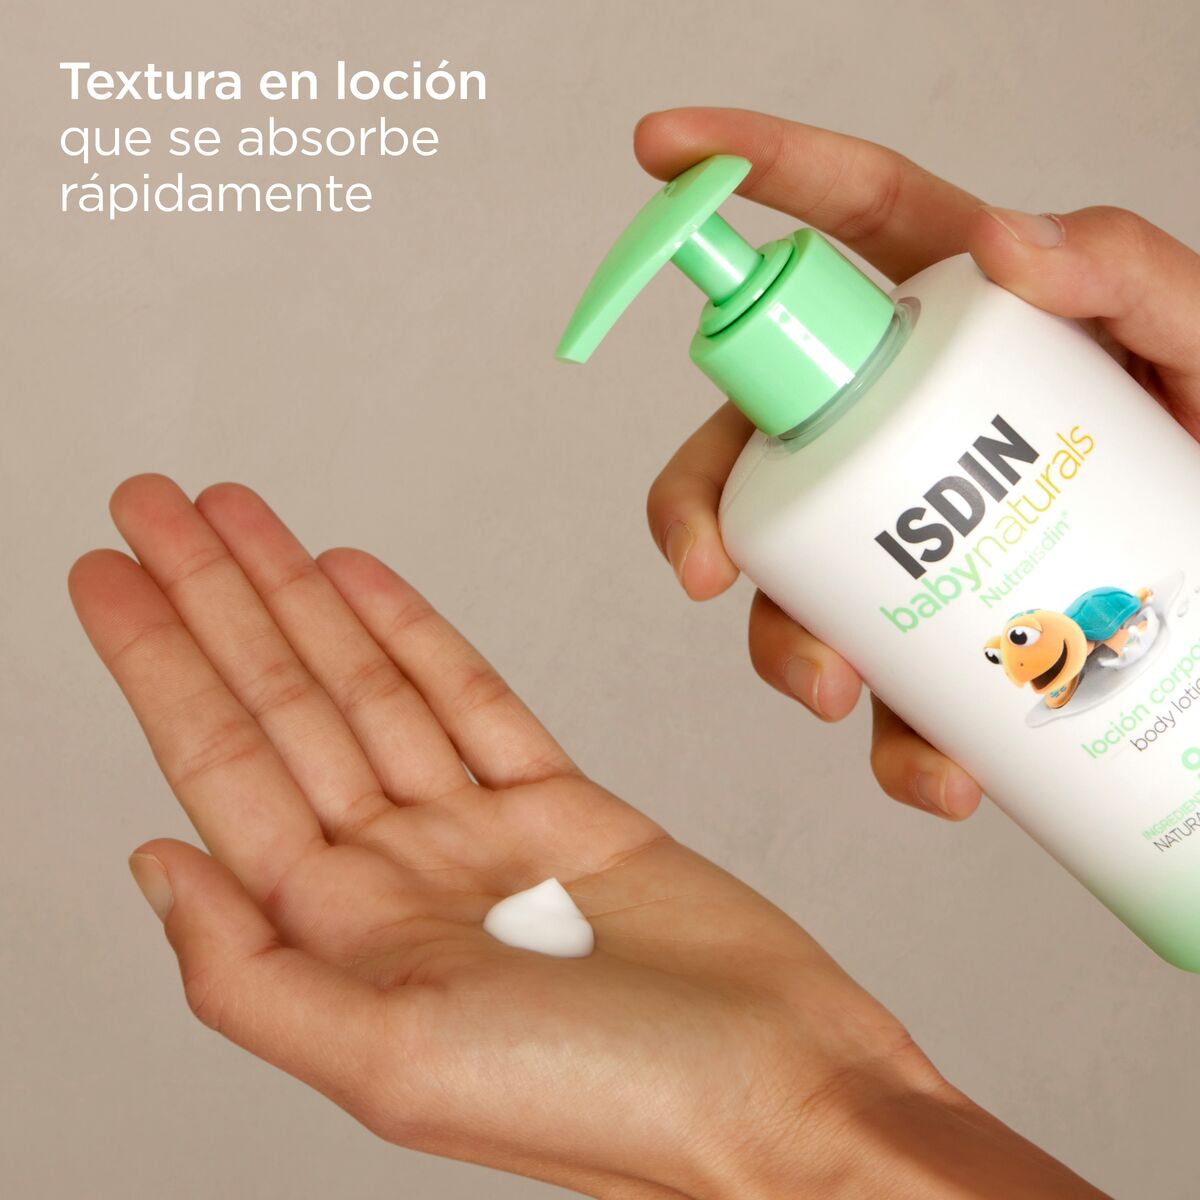 Isdin Baby Naturals Mini Set (gel de ducha/200ml + loción corporal/200ml +  gel corporal/20ml) - Set